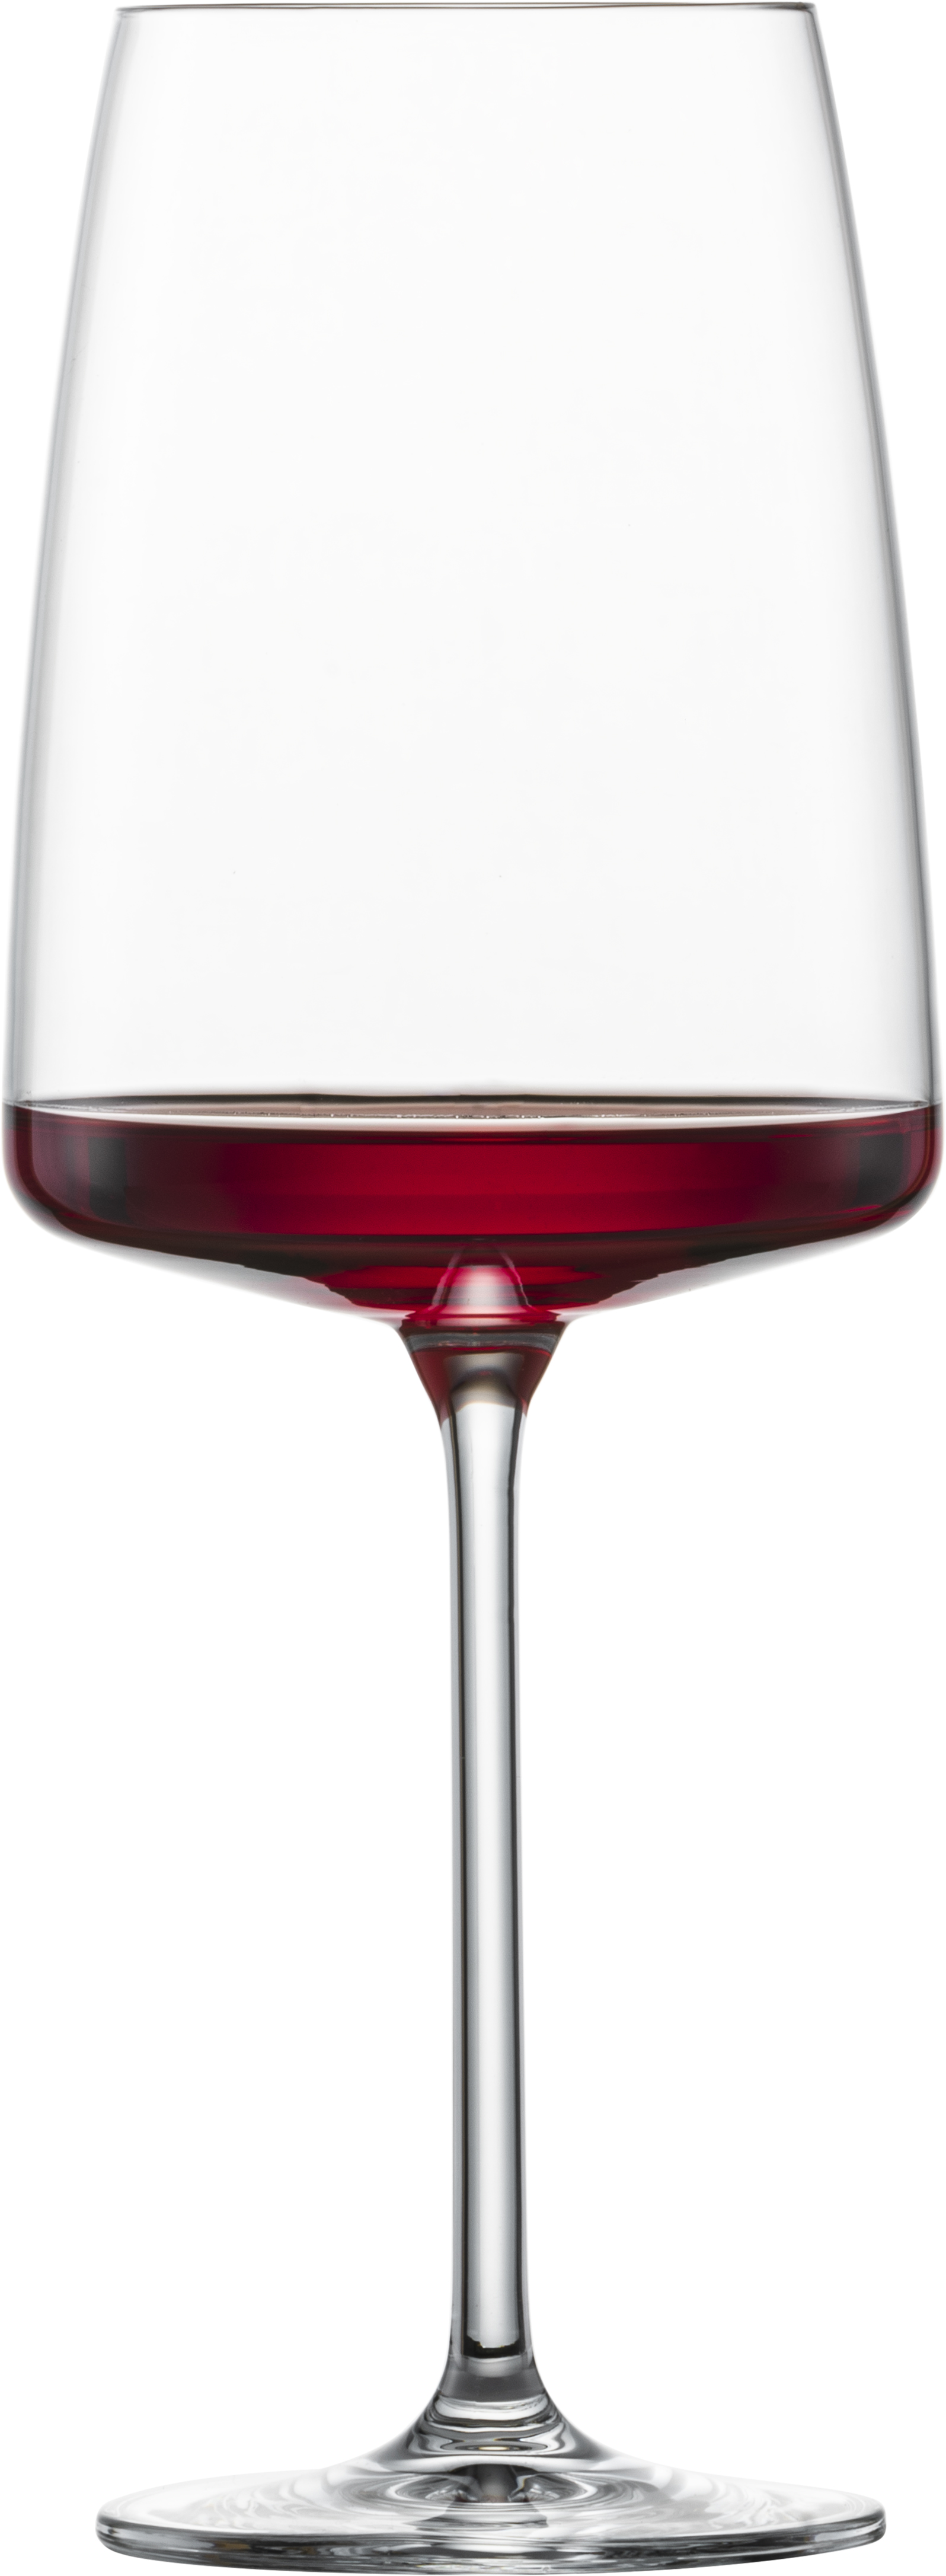 Weinglas fruchtig & fein VIVID SENSES(Sensa) 535ml spülmaschinenfest, Tritan Protect, Tritan 